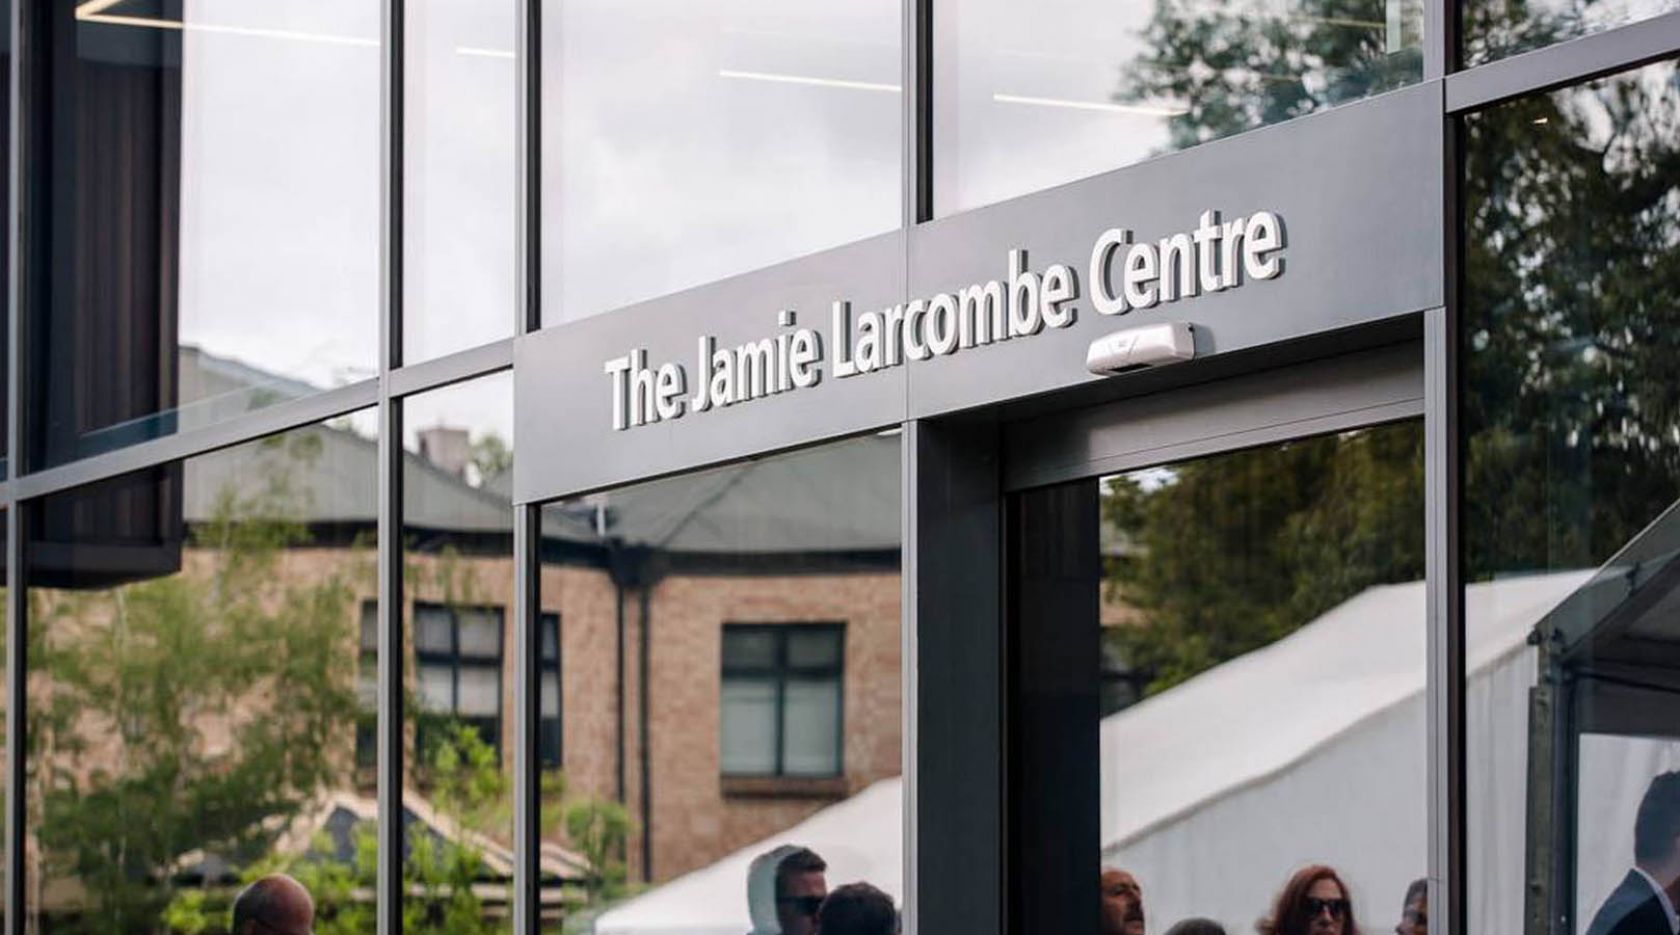 Jamie Larcombe Centre SA construction veterans mental healthcare 